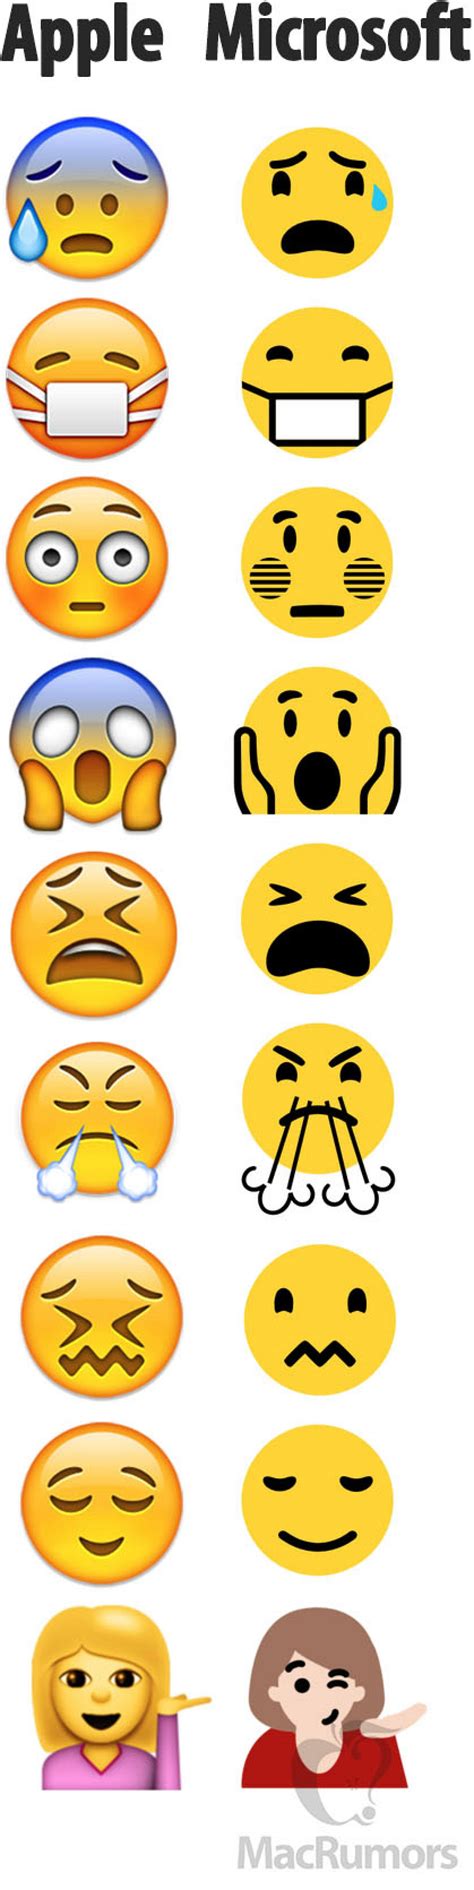 microsoft updates windows  emoji  resemble apples collection macrumors